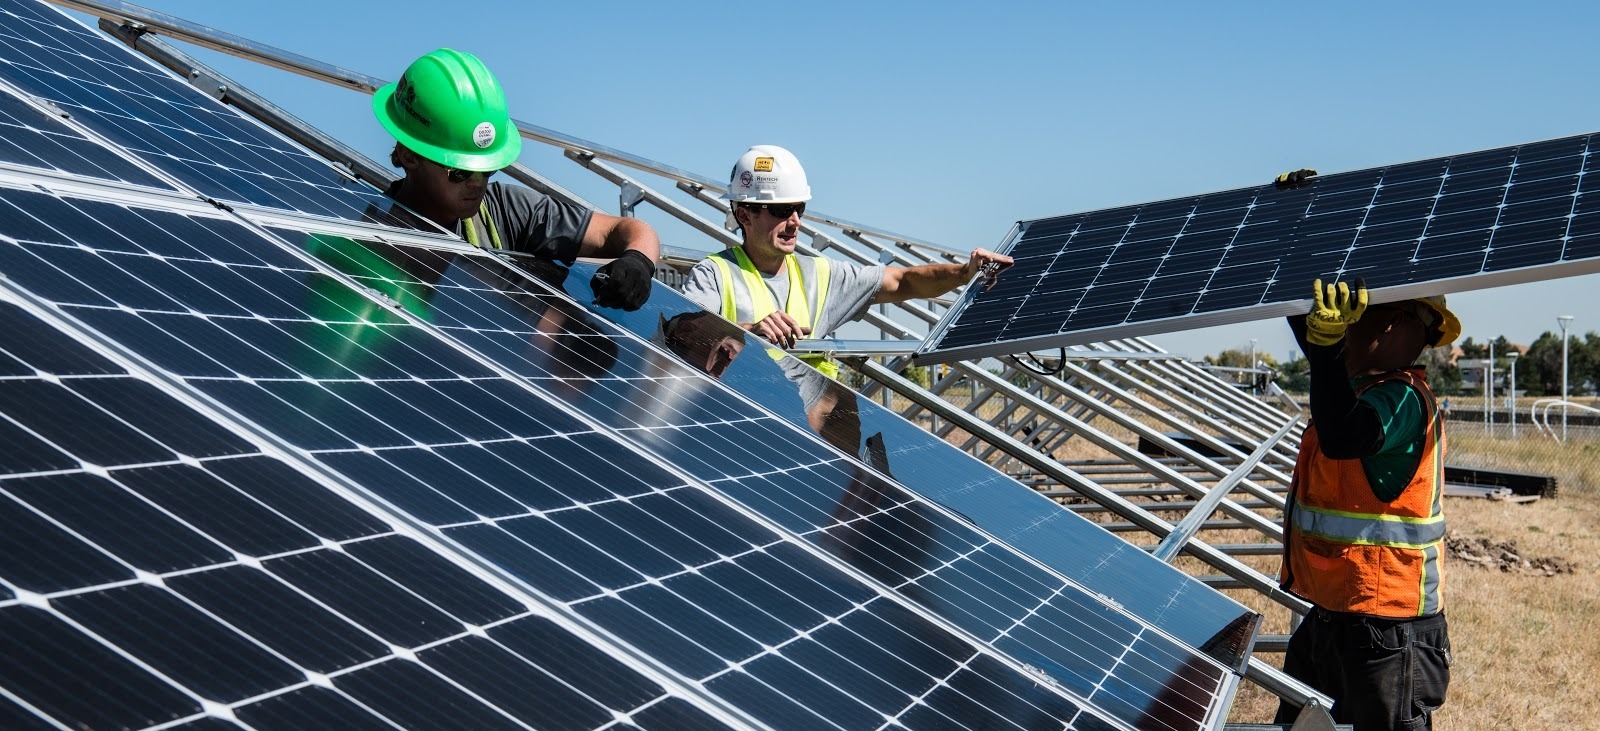 Renewable energy creates more job opportunities